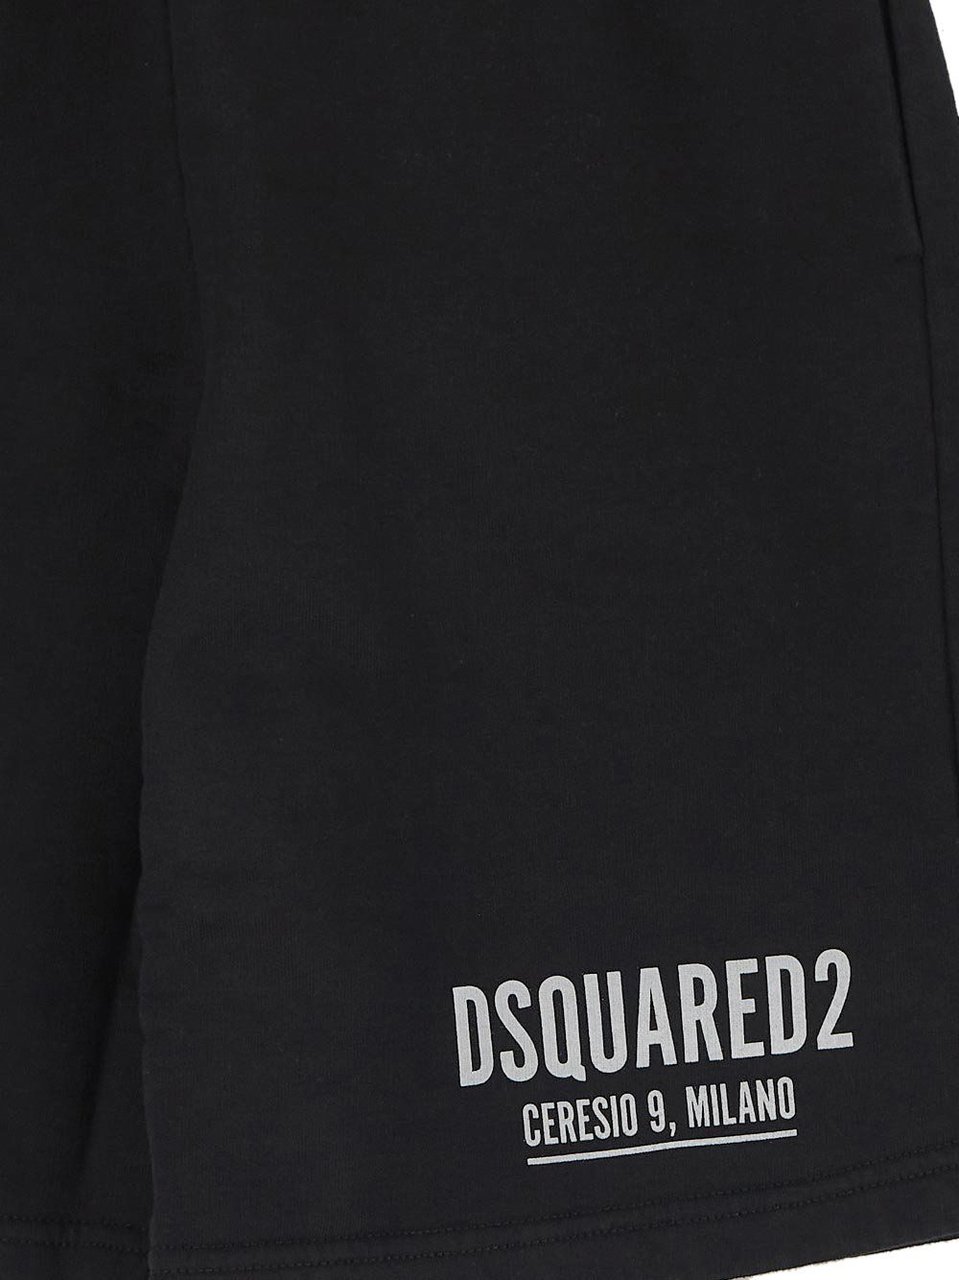 Dsquared2 Cotton Shorts Zwart